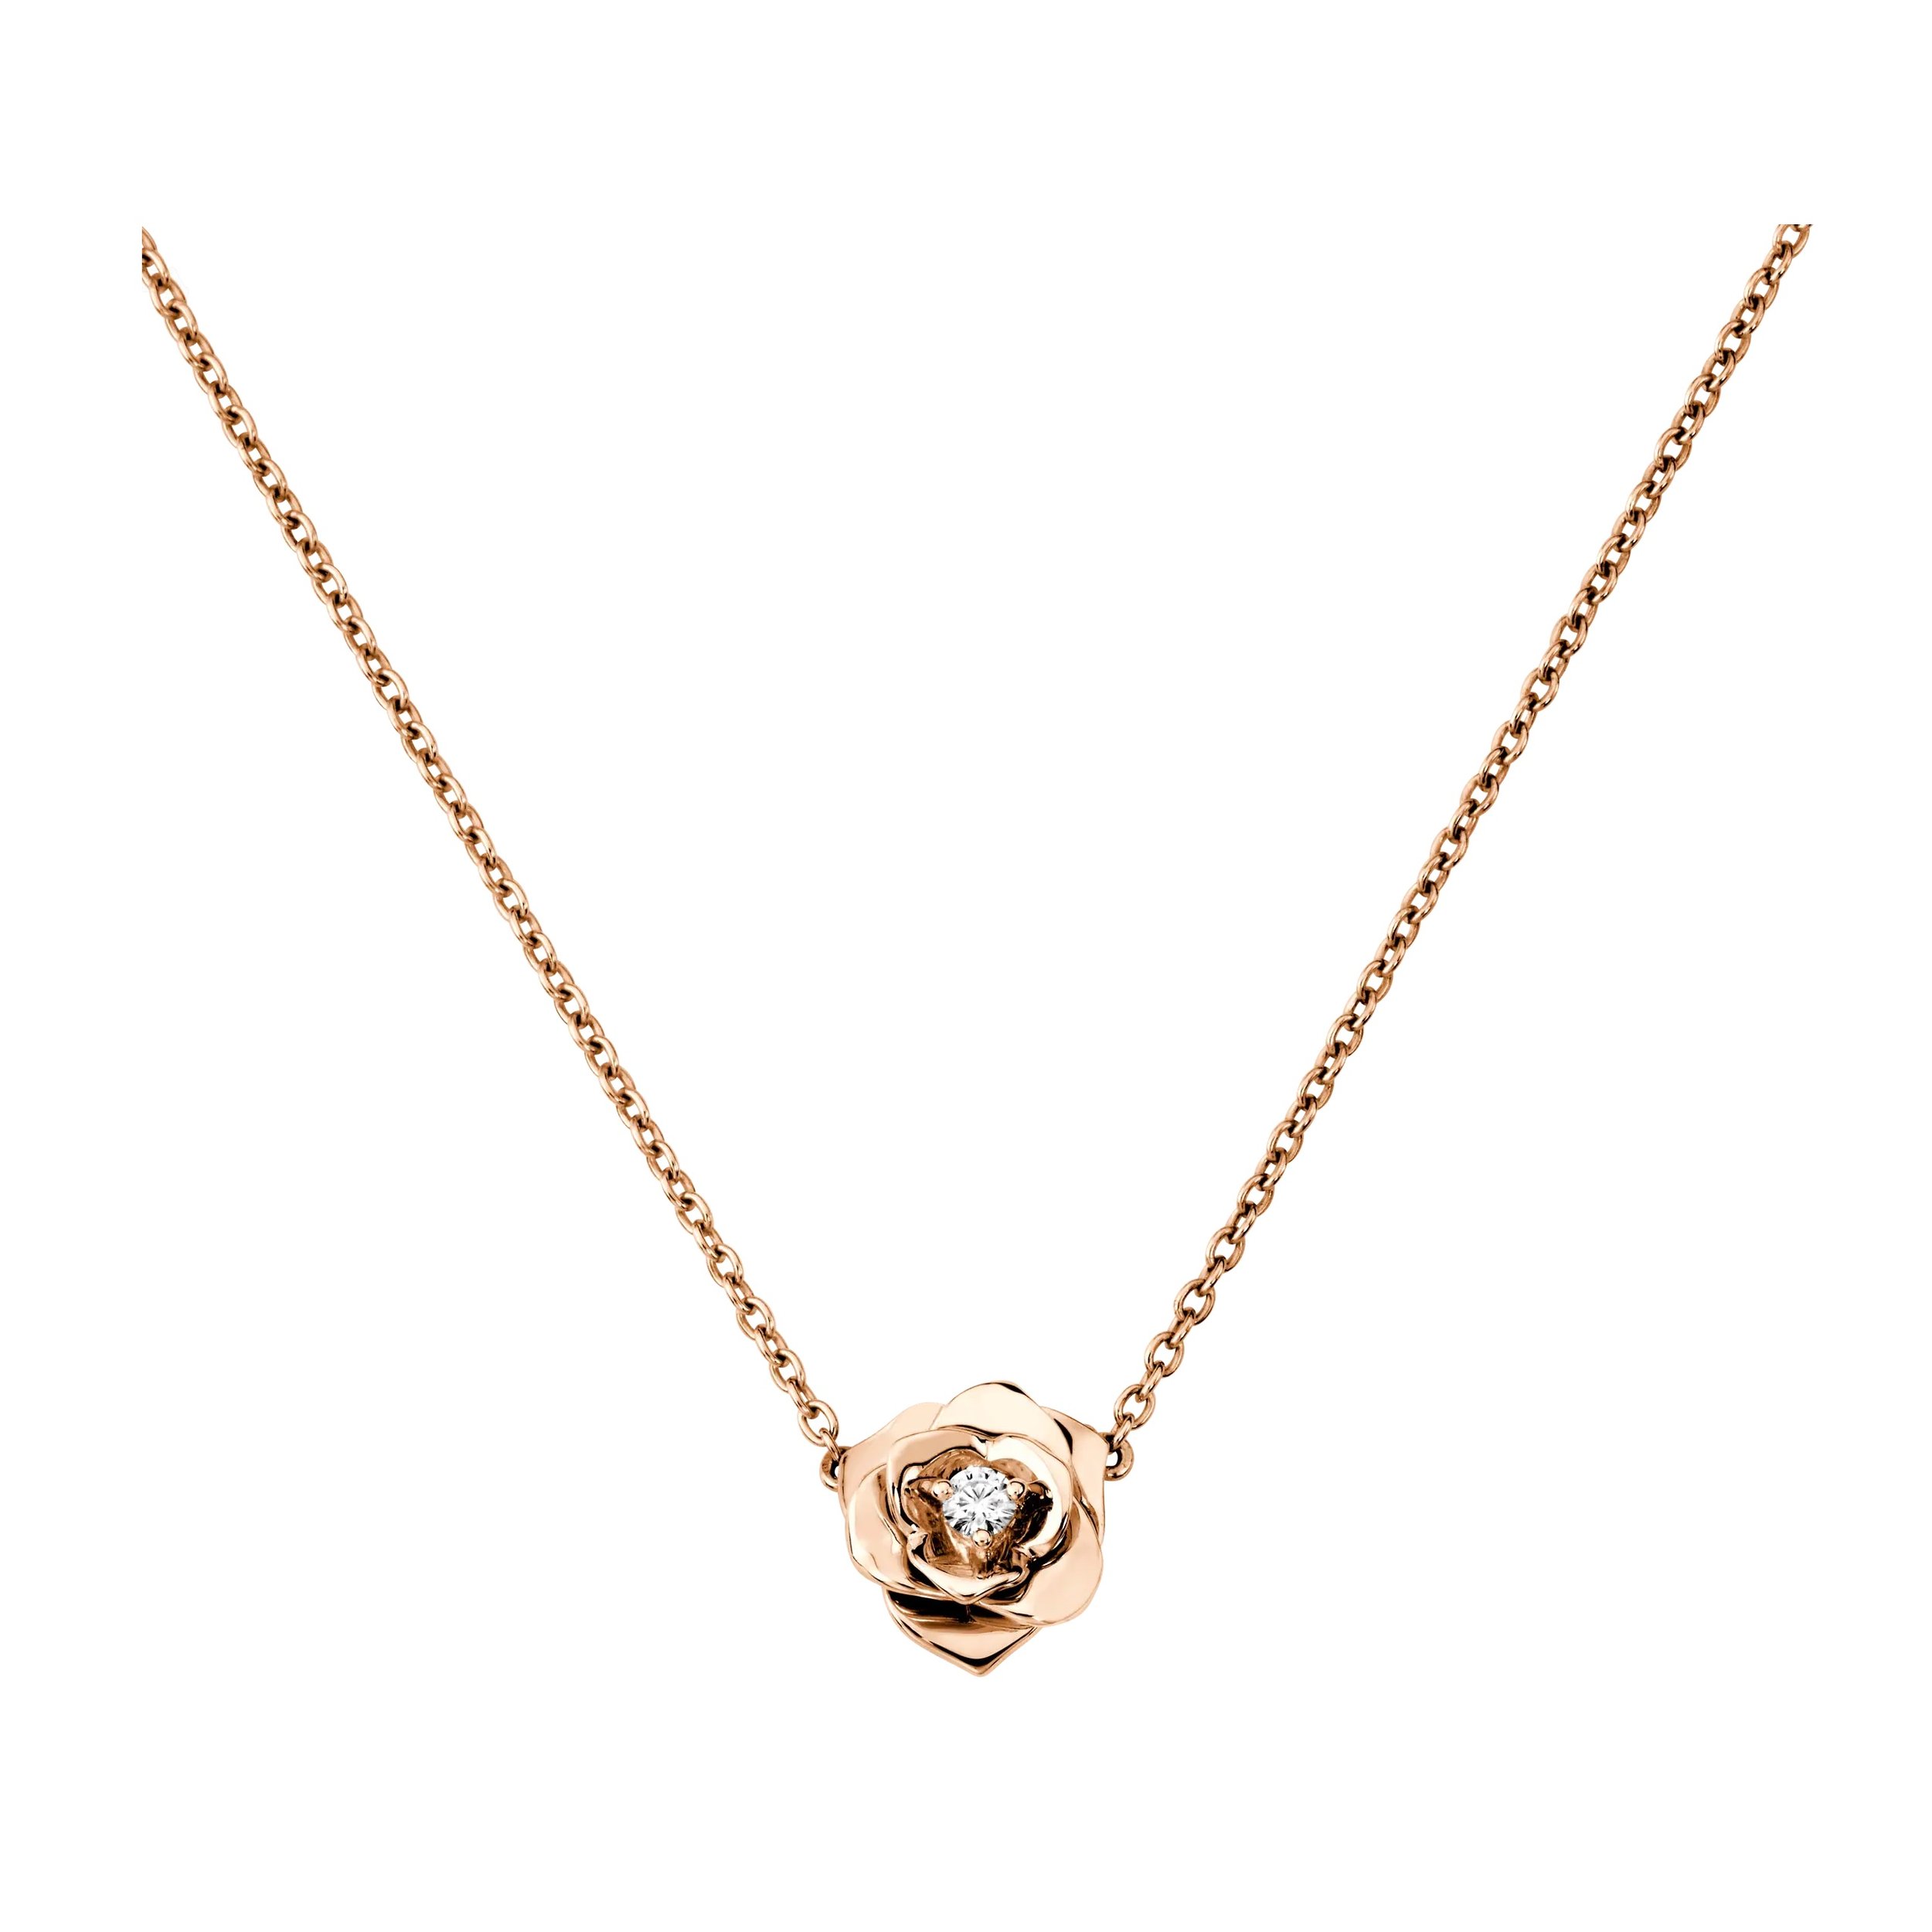 Piaget “Rose” pendant in 18k rose gold with diamond, $2,200 at Piaget